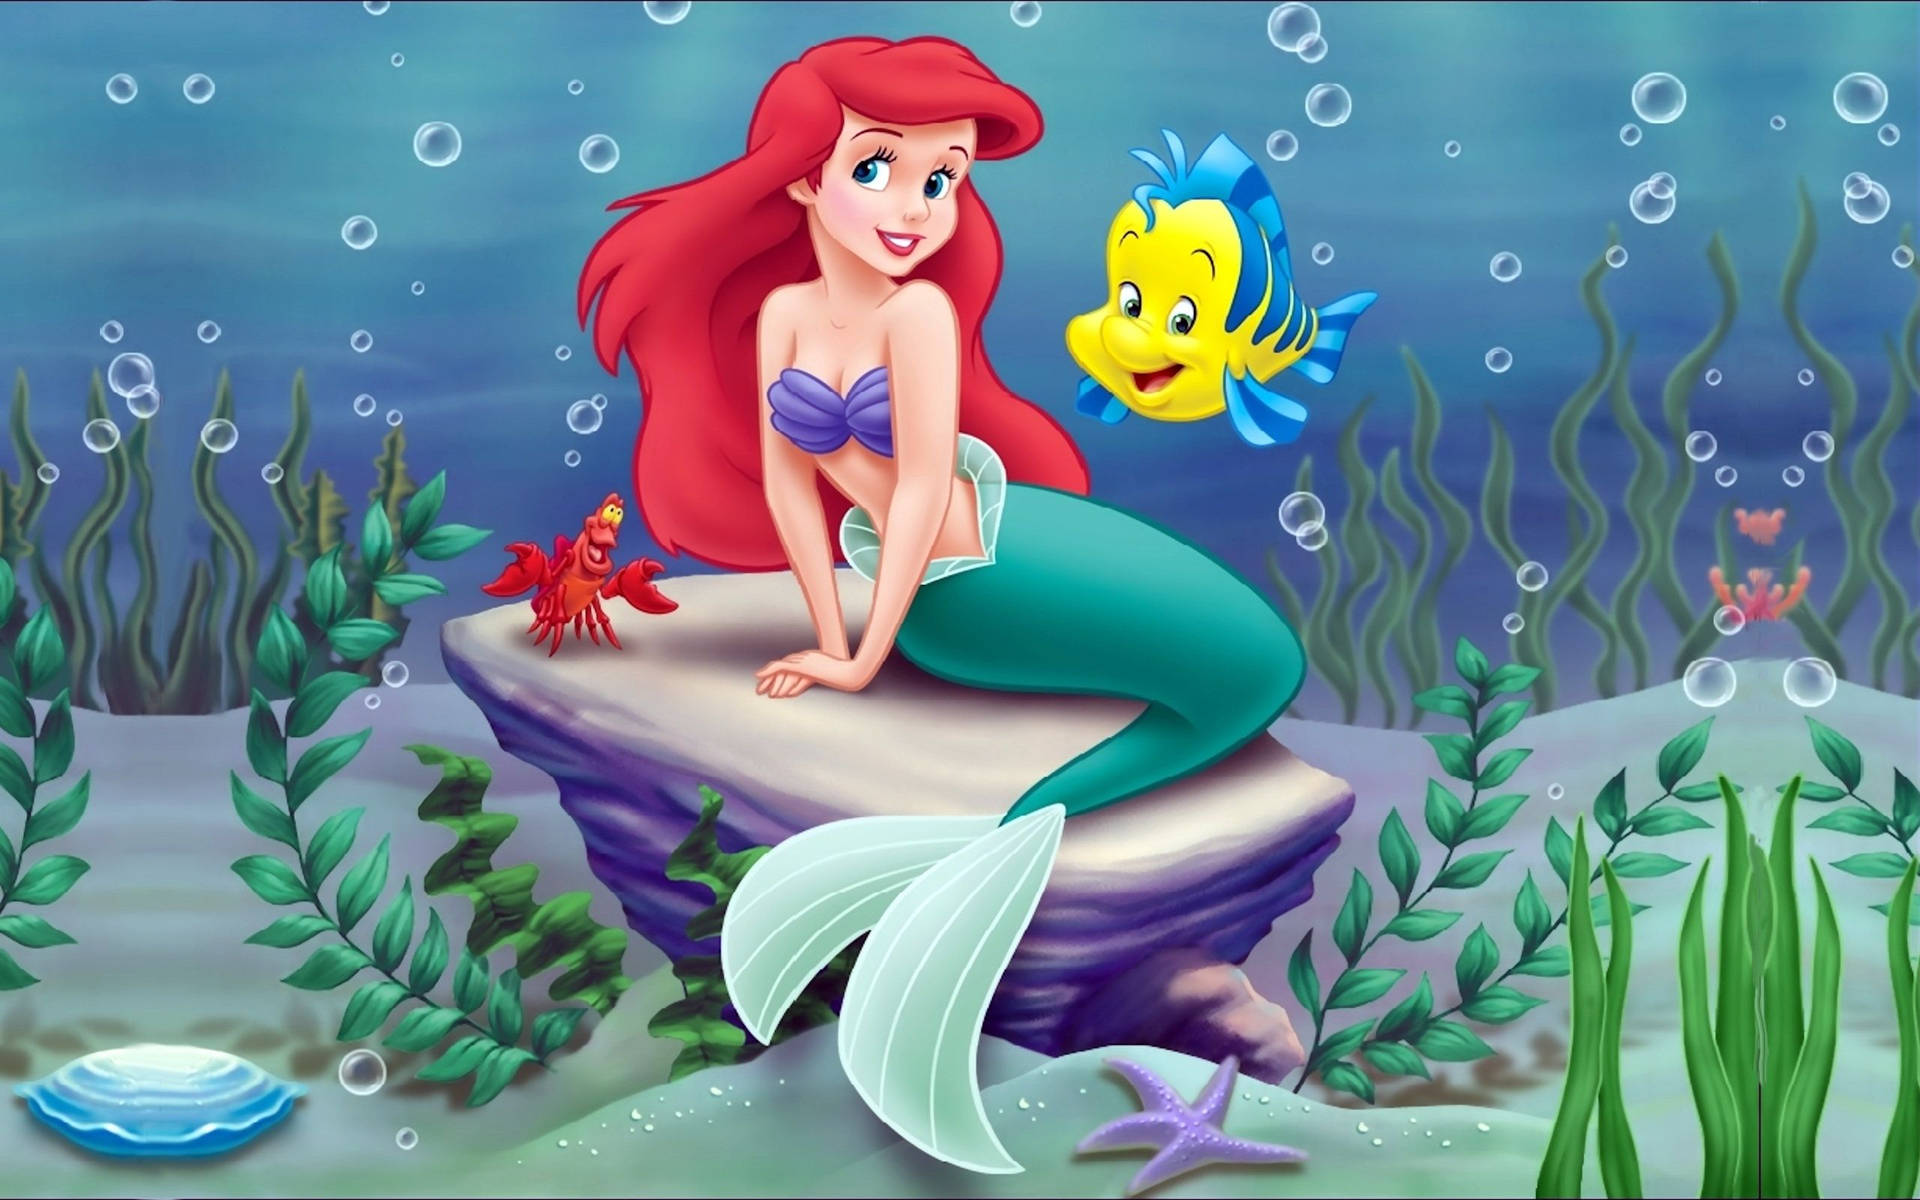 Free Mermaid Wallpaper Downloads, [200+] Mermaid Wallpapers for FREE |  